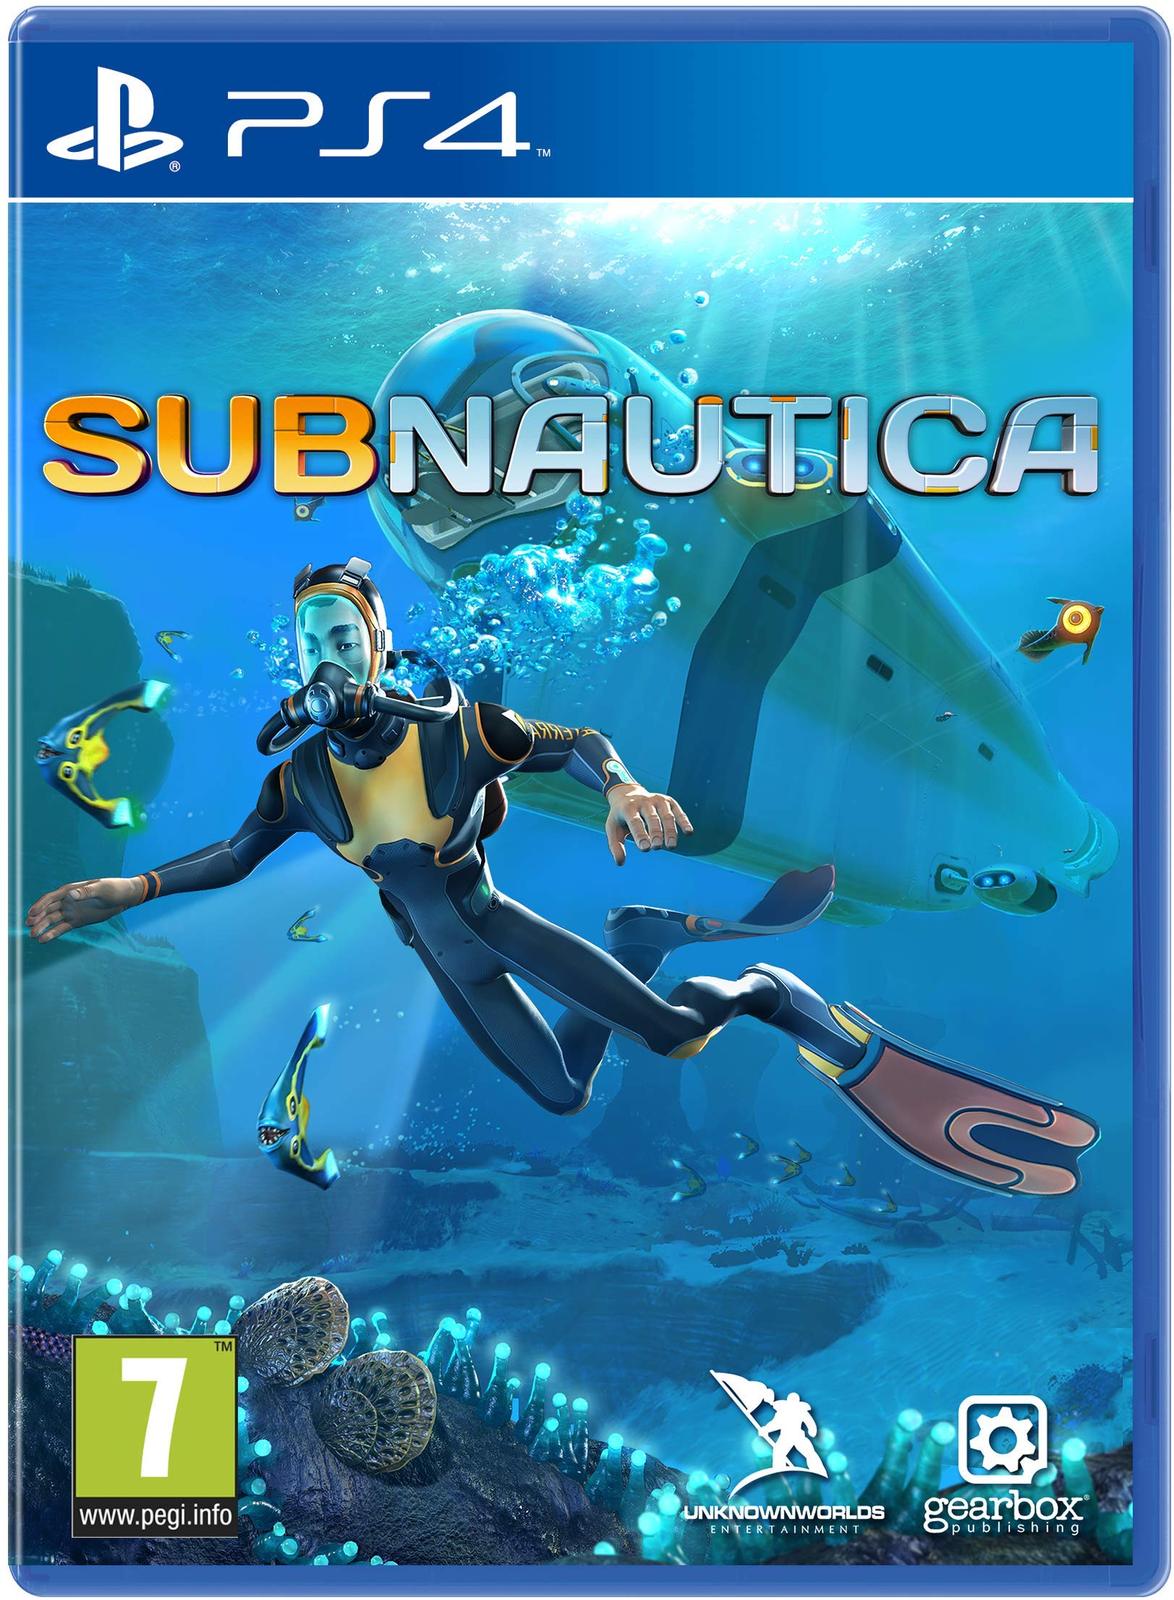 subnautica game length